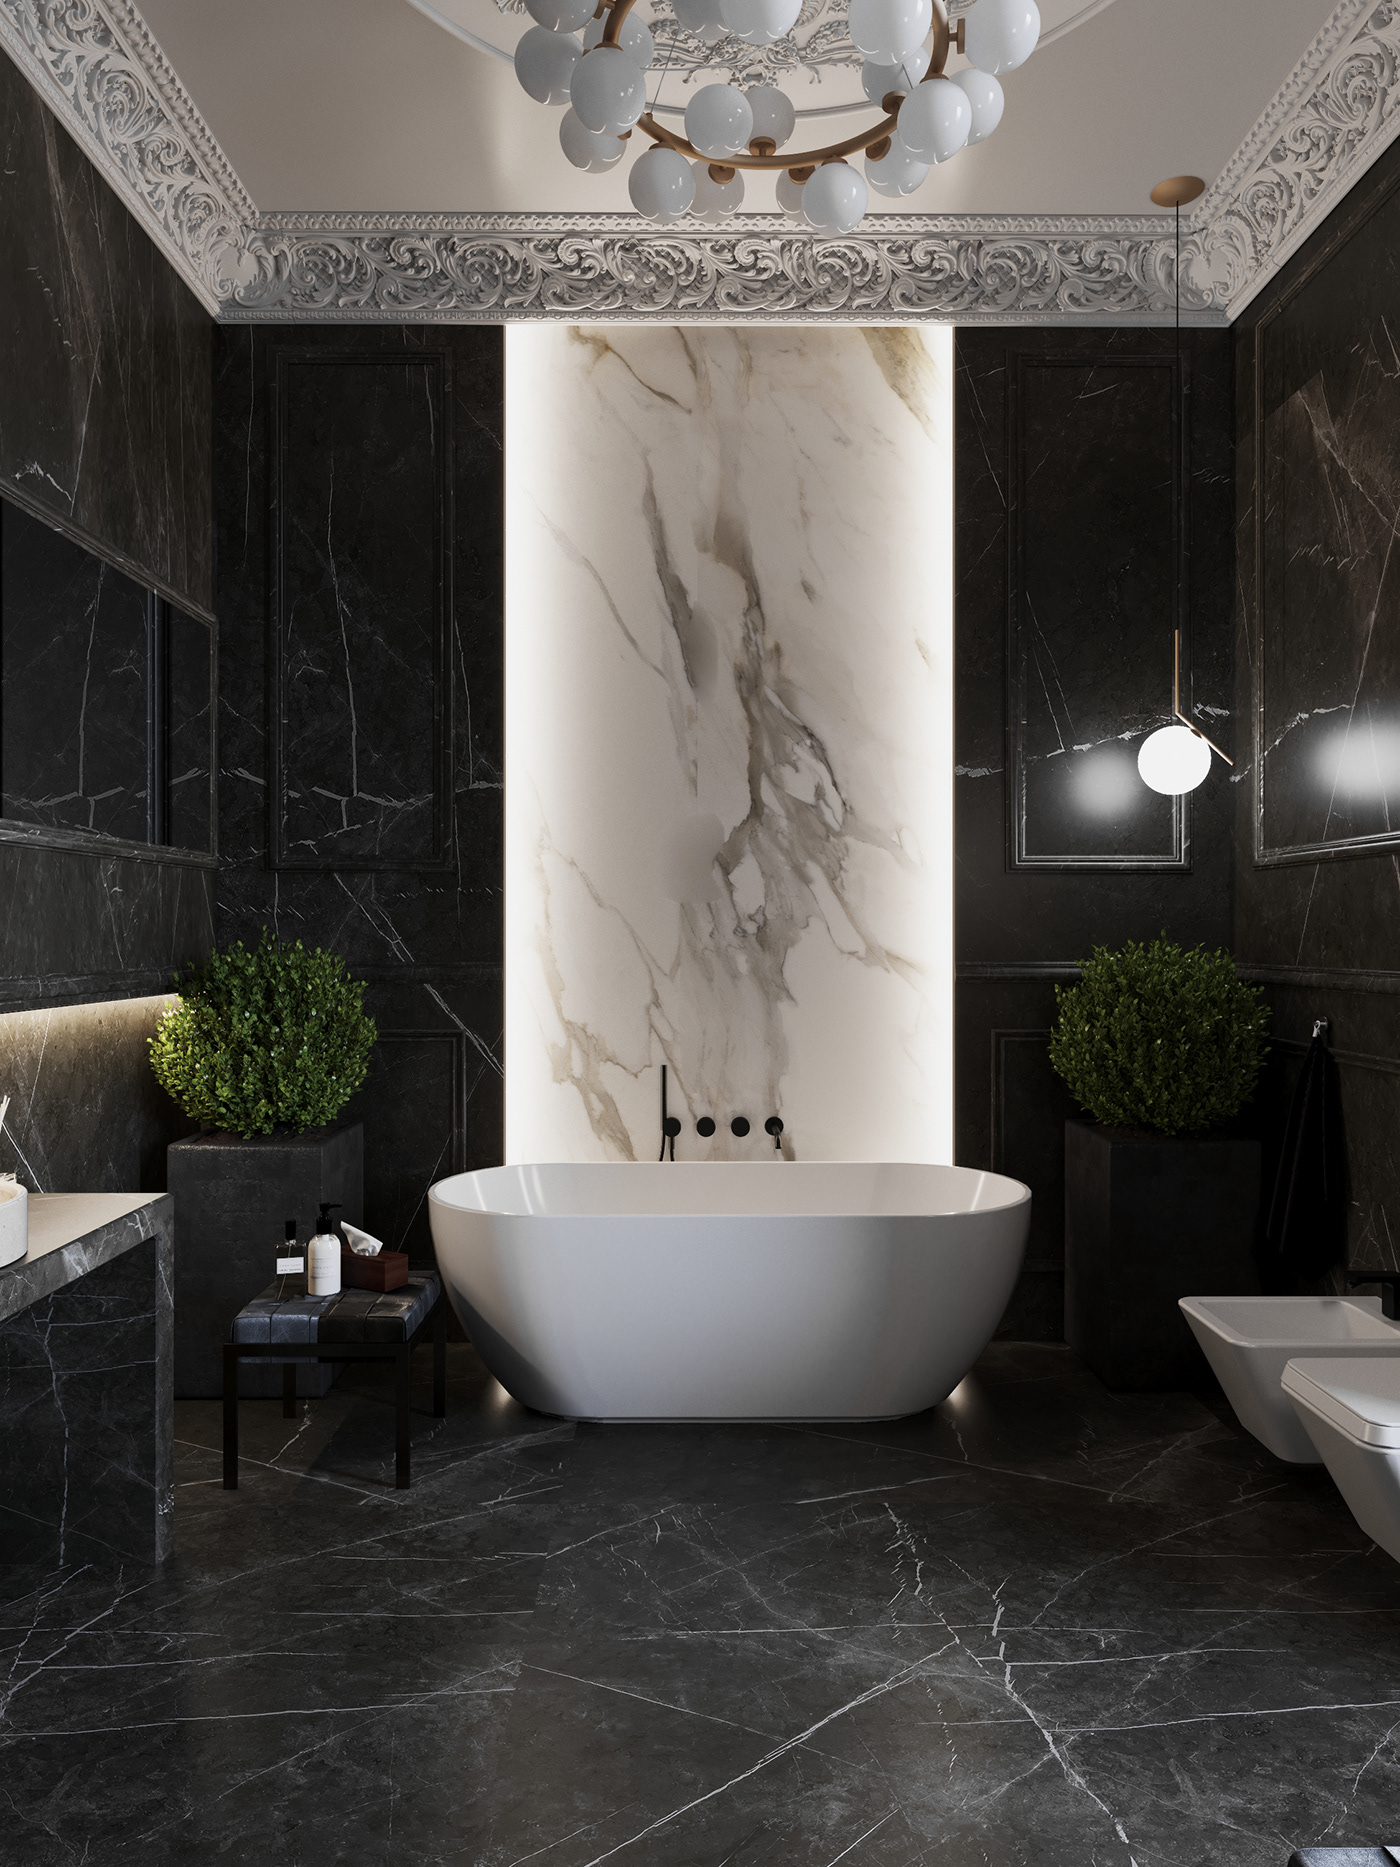 visualisation interiordesign Project apartment luxury Russia novosibirsk CGI Render corona